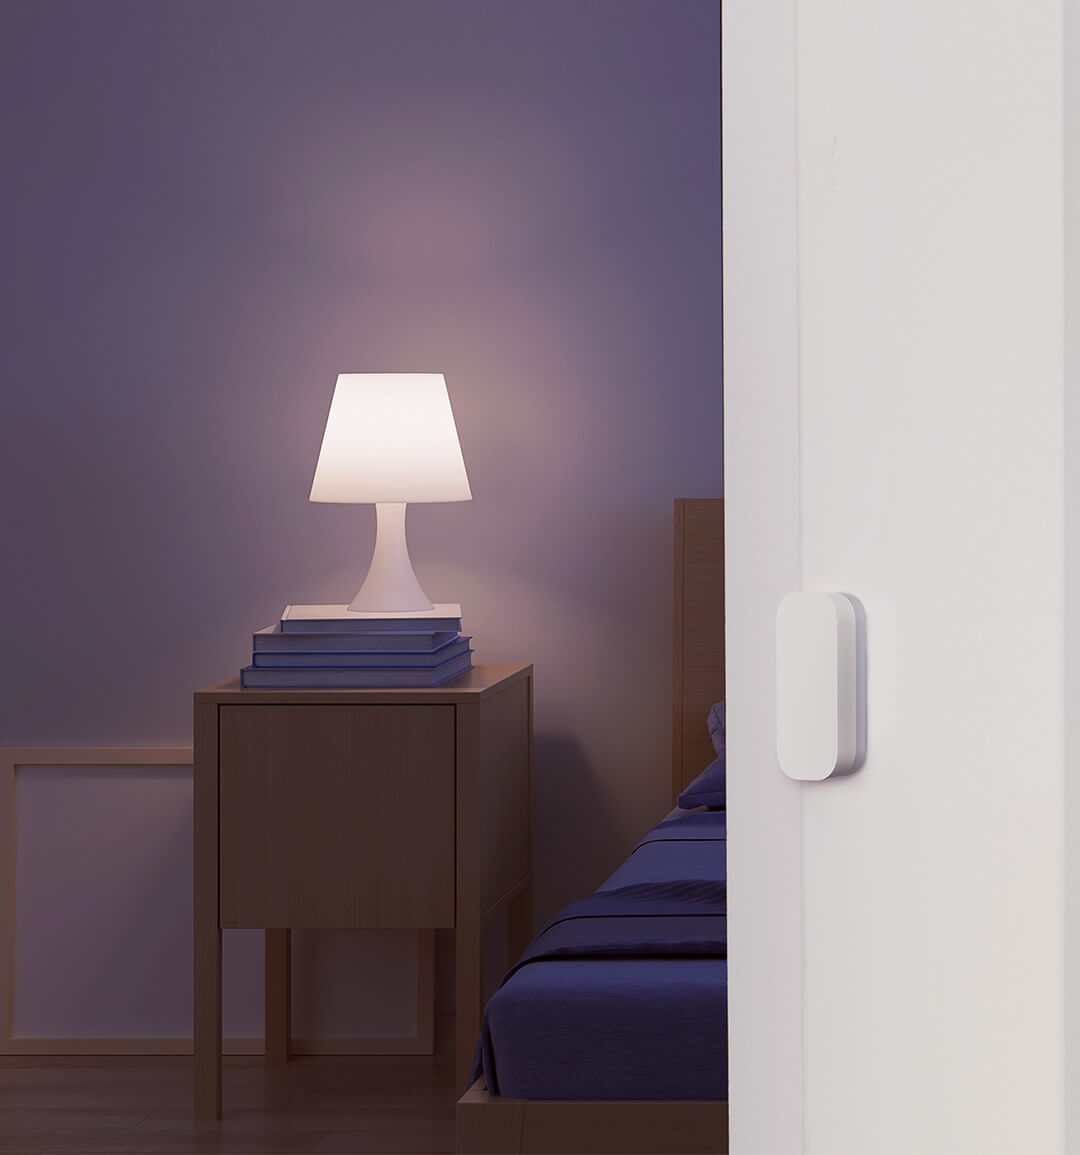 Smart bulb + door swnsor: Desk light Automatically Turns On When You Open the Door